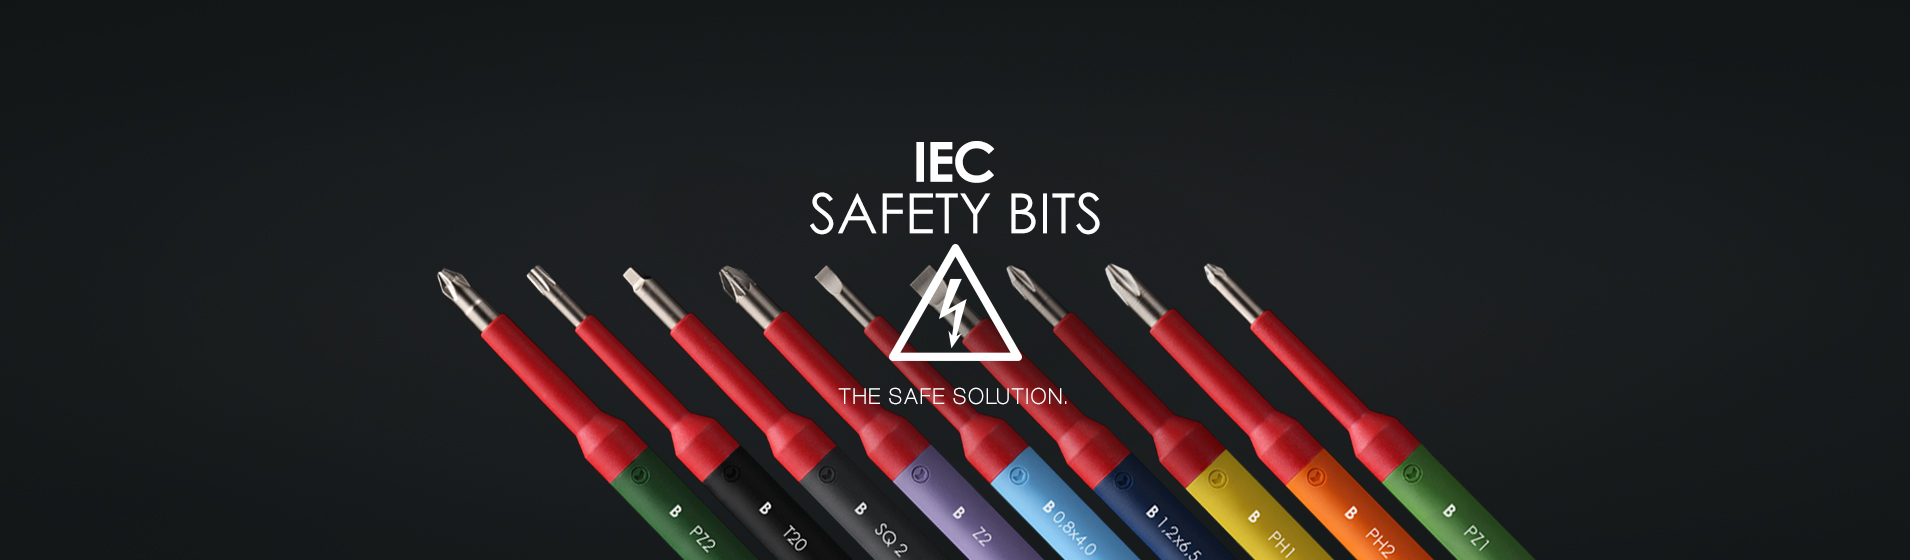 IEC SAFETY BITS